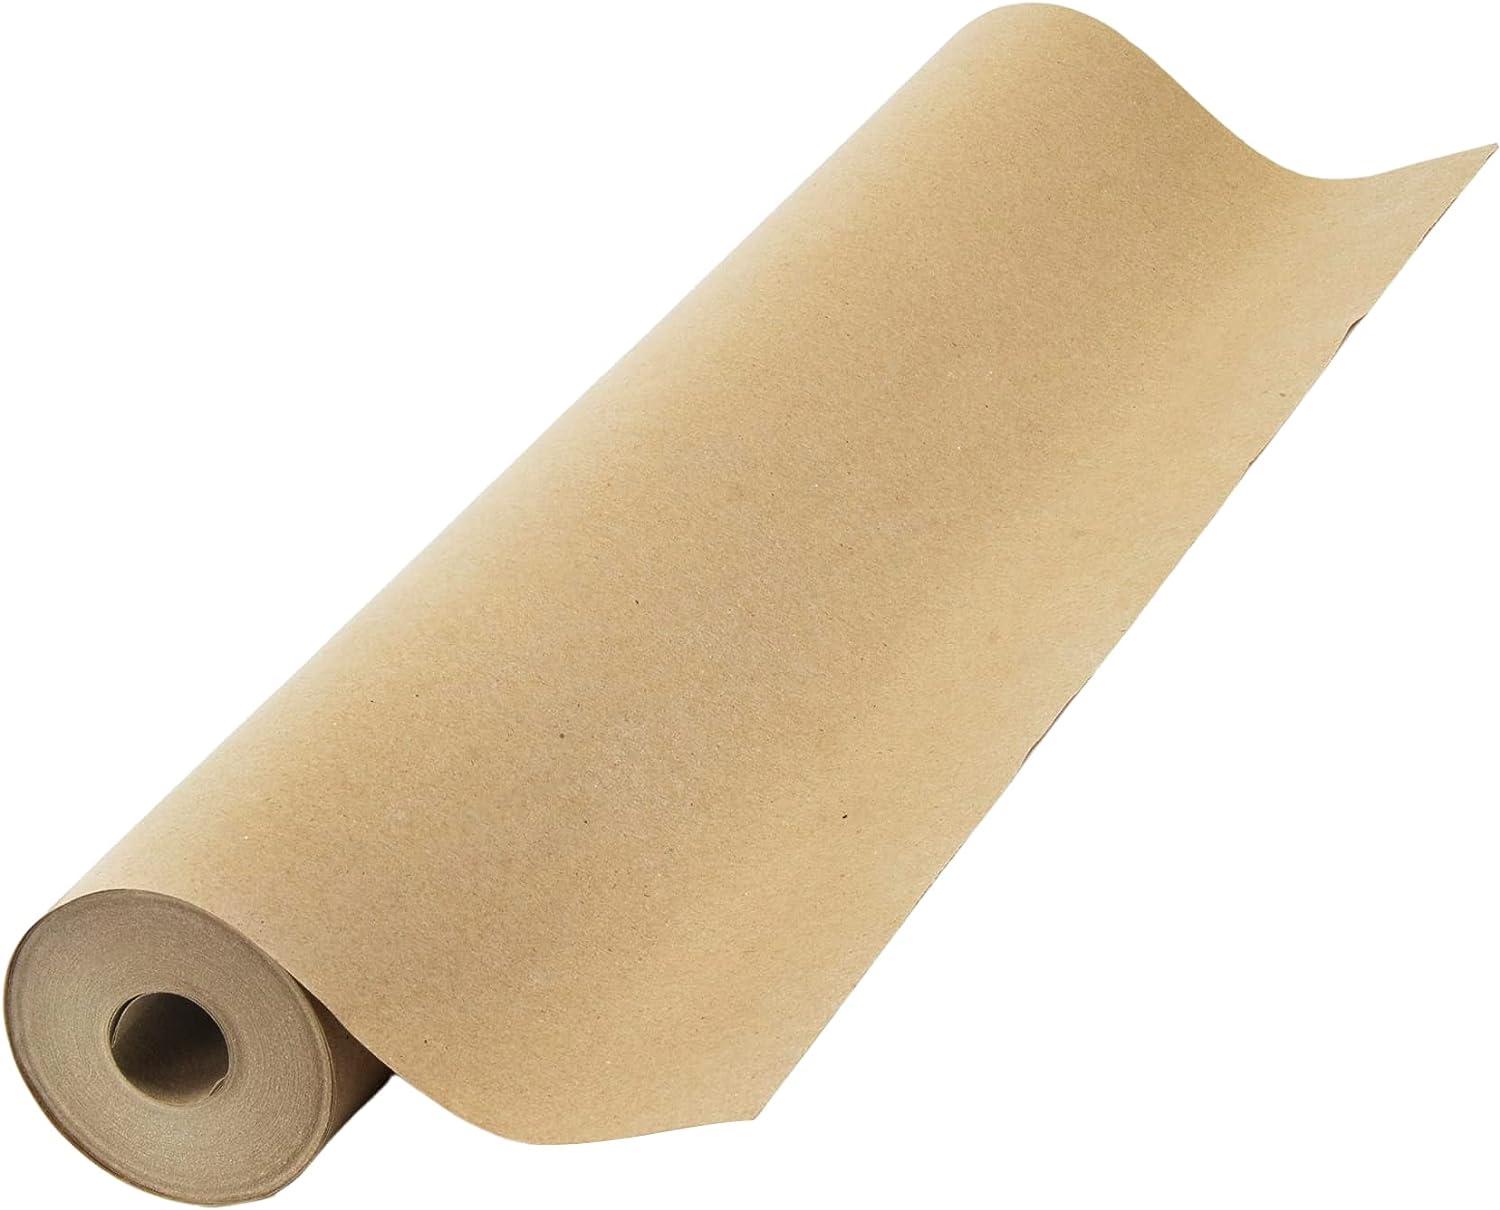 Brown Kraft Recycled Paper Roll 30 Meters For Birthday, Wedding